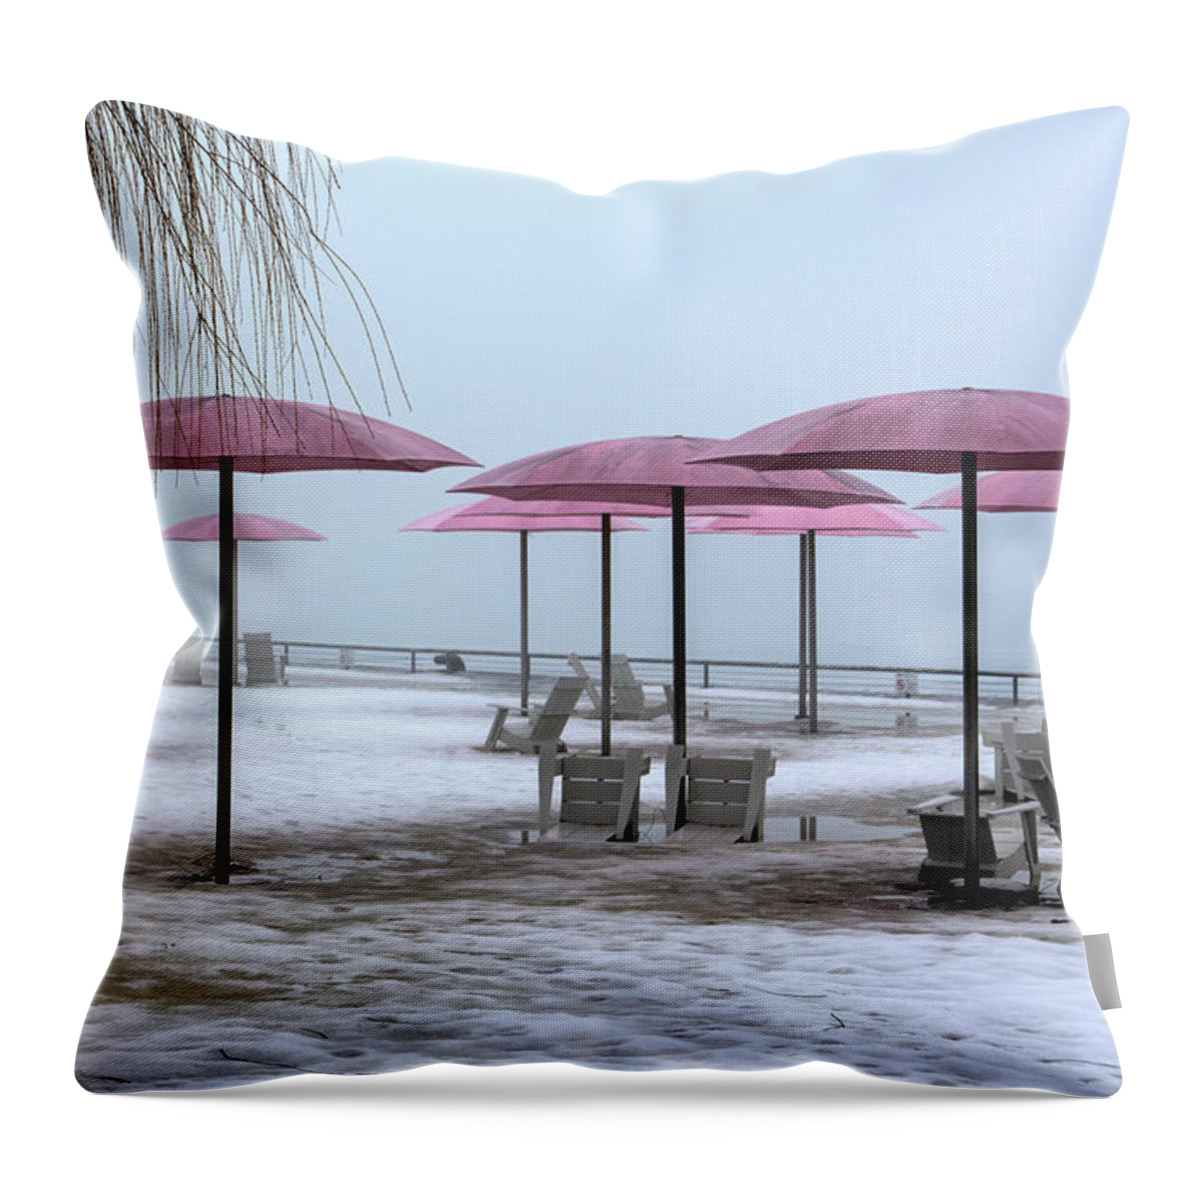 Toronto Throw Pillow featuring the digital art Sugar Beach Pink Parasols by Nicky Jameson